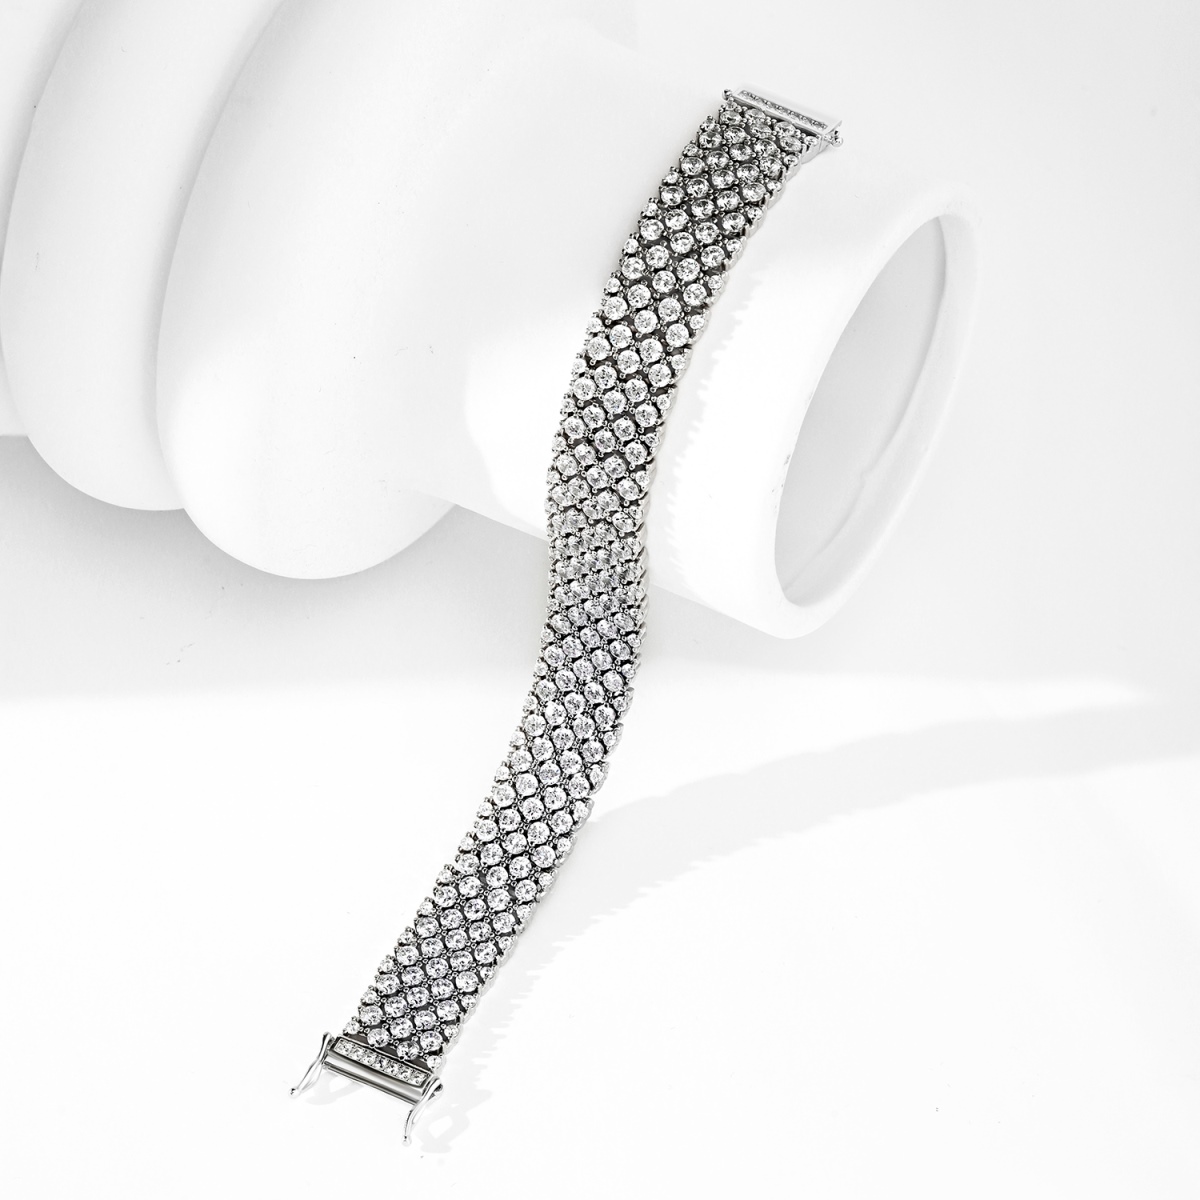  DEDEJILL Luxurious Pave Tennis Bracelet